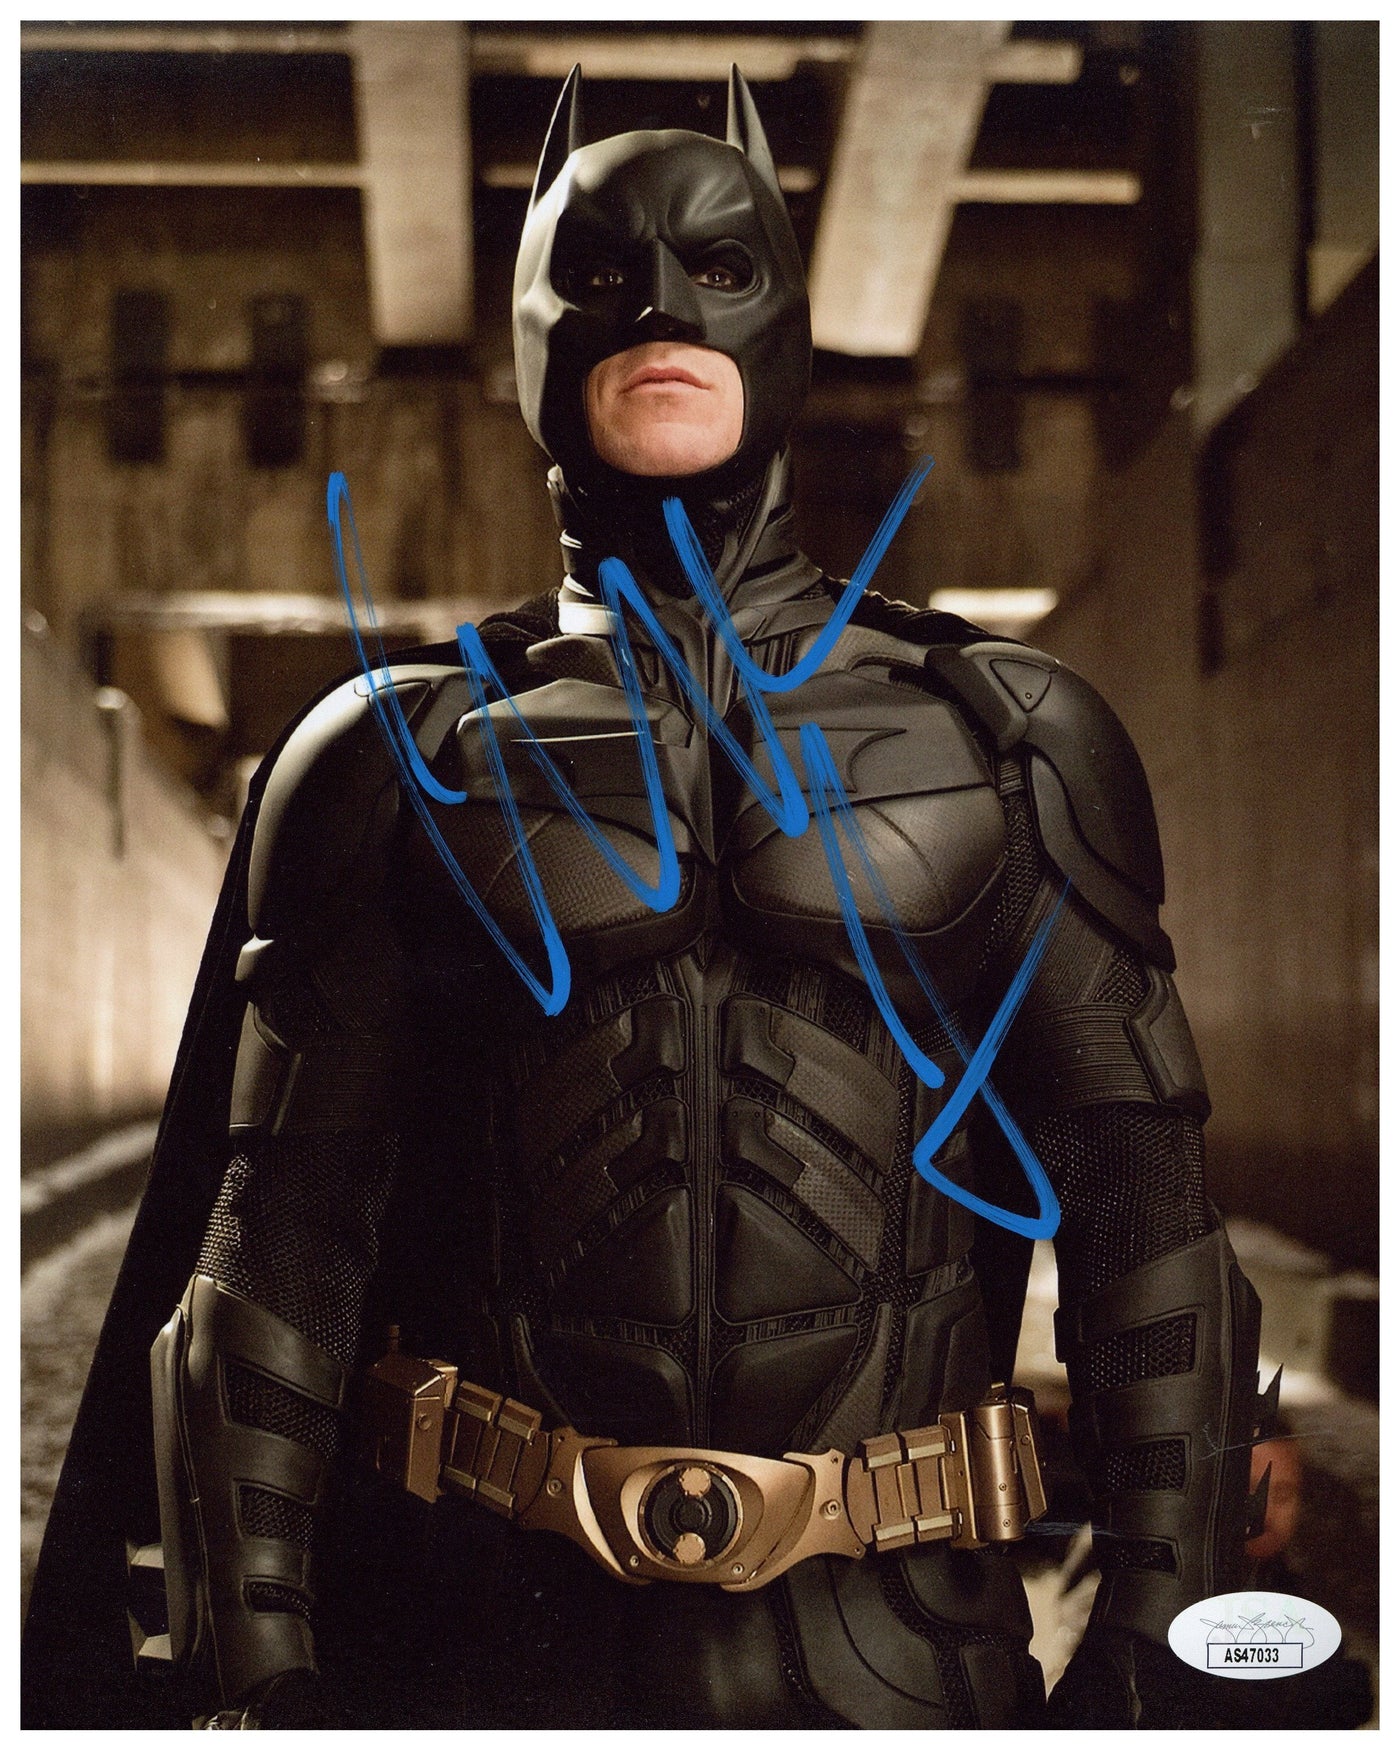 Christian Bale Signed 8x10 Photo The Dark Knight Batman Autographed JSA COA #3